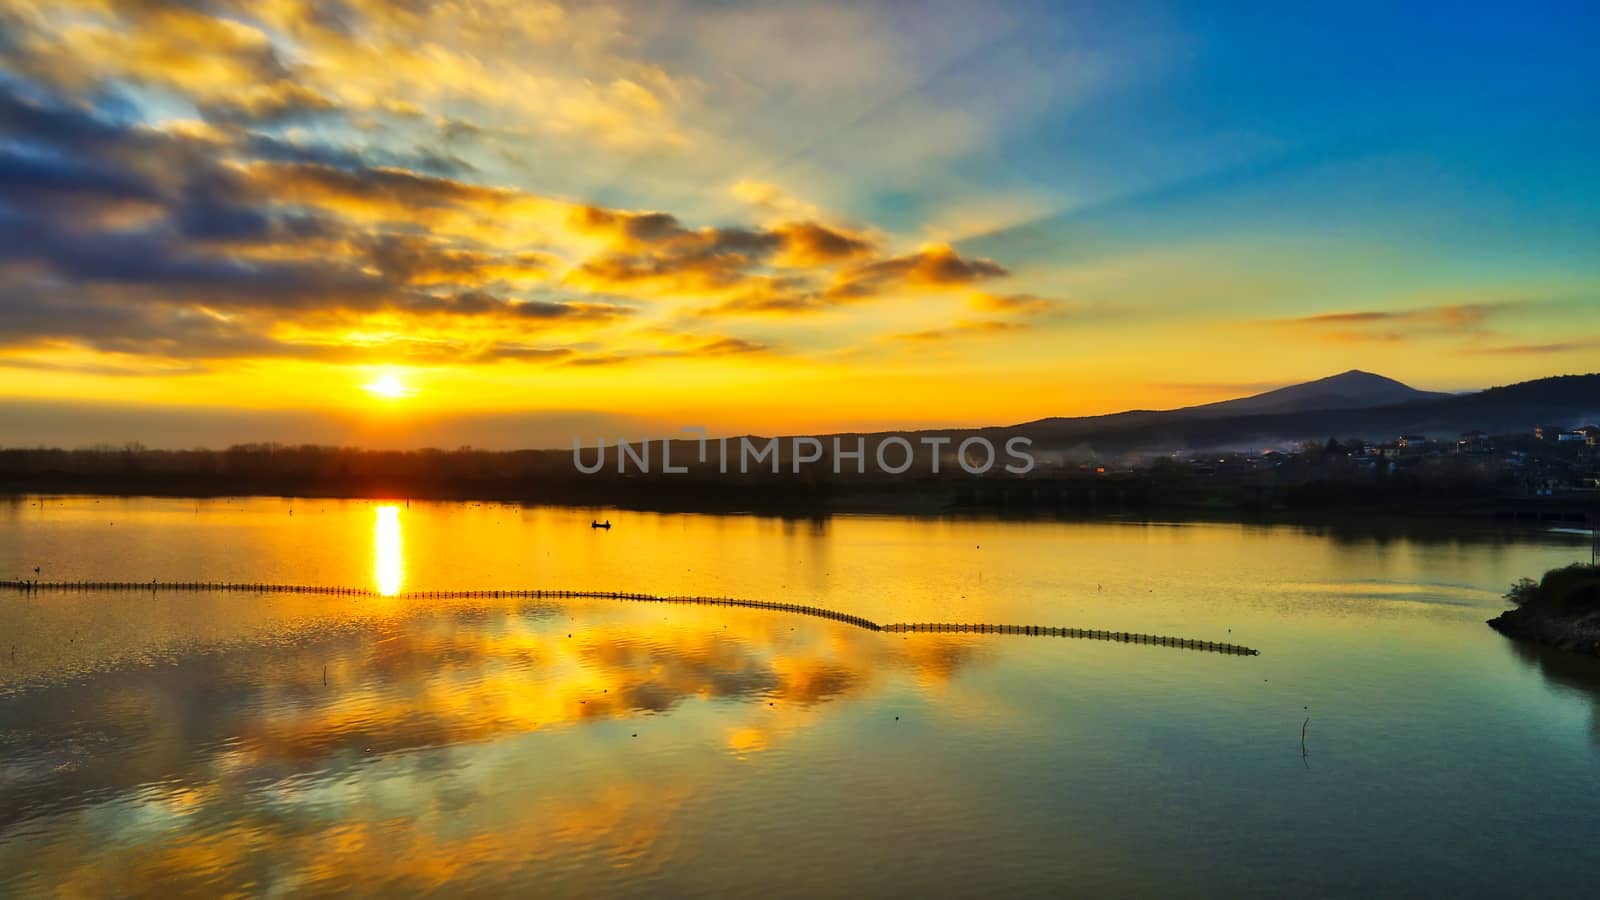 Sunrise over the wetland of Kerkini Lake in northern Greece by ververidis